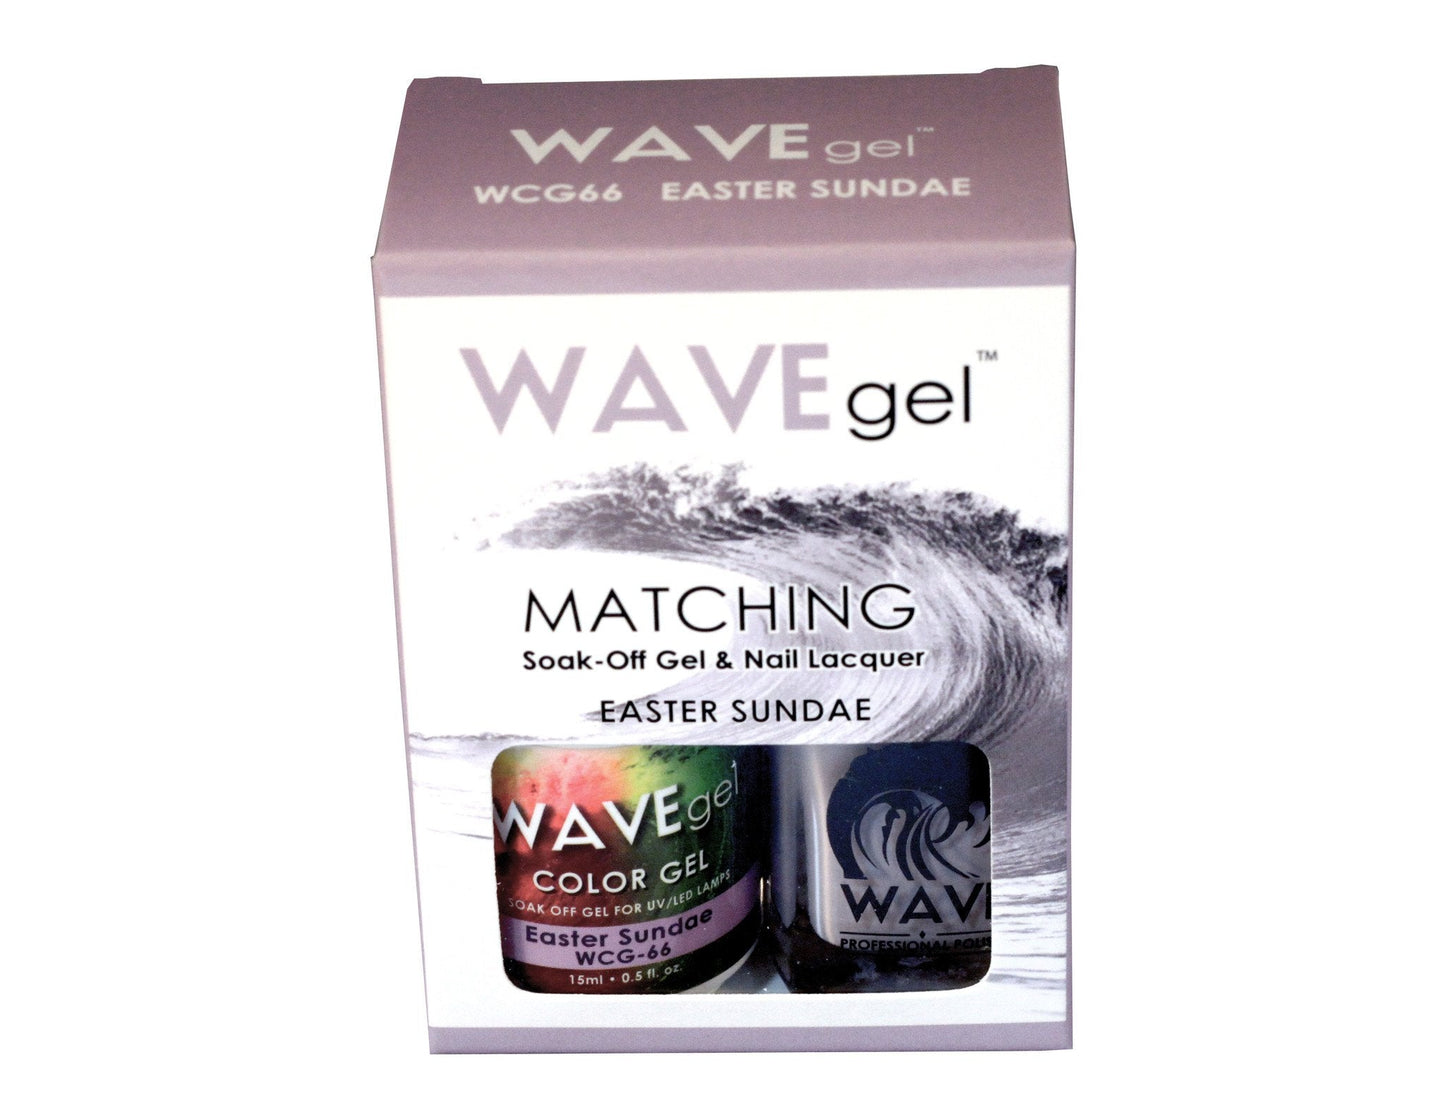 Wave Gel - WCG66 EASTER SUNDAE